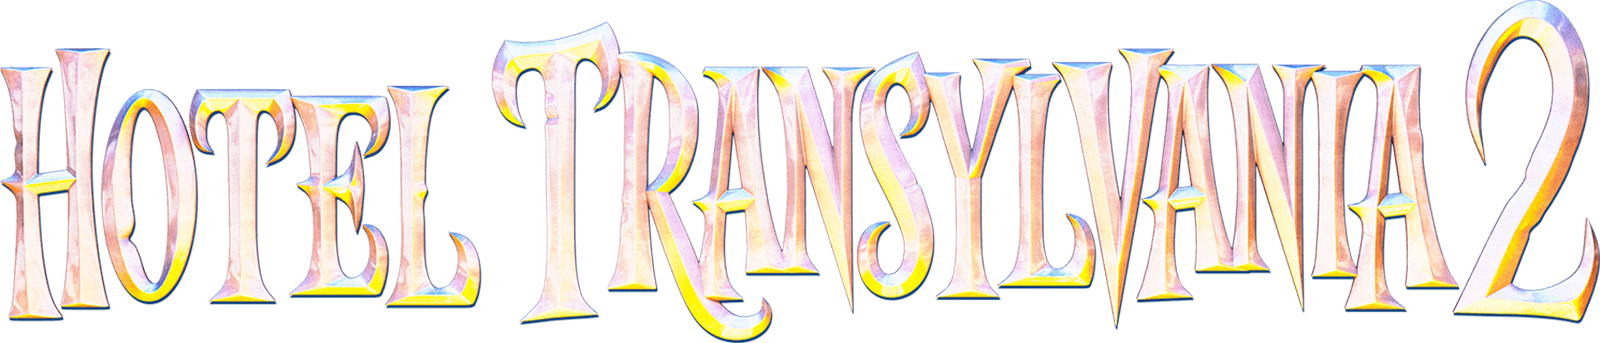 Hotel Transylvania 2 logo